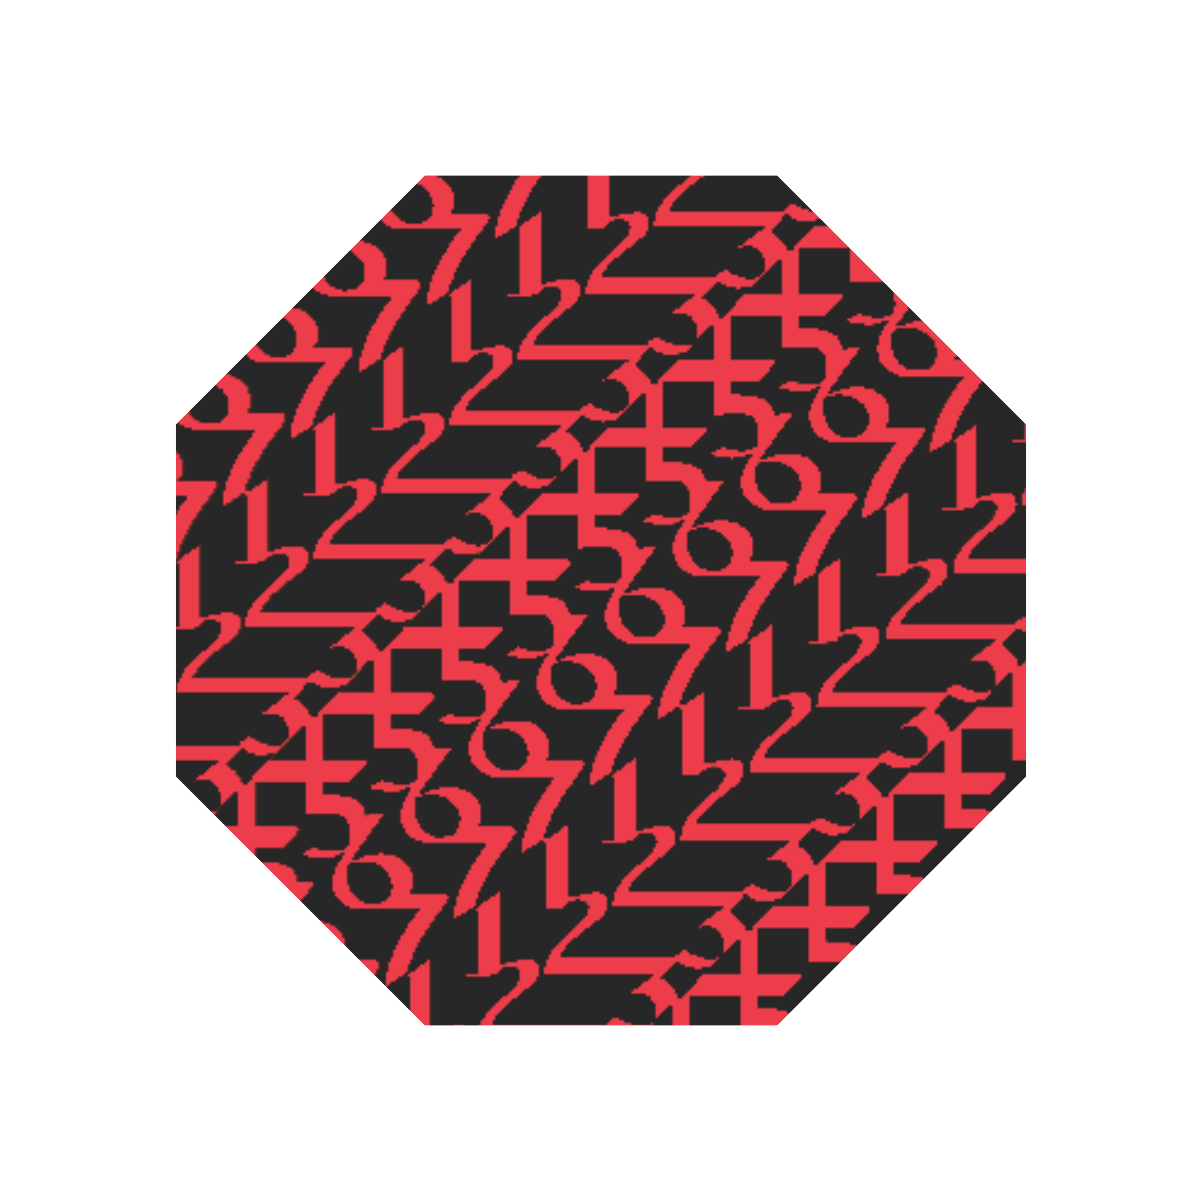 NUMBERS Collection 1234567 Reverse Red/Black Anti-UV Auto-Foldable Umbrella (Underside Printing) (U06)